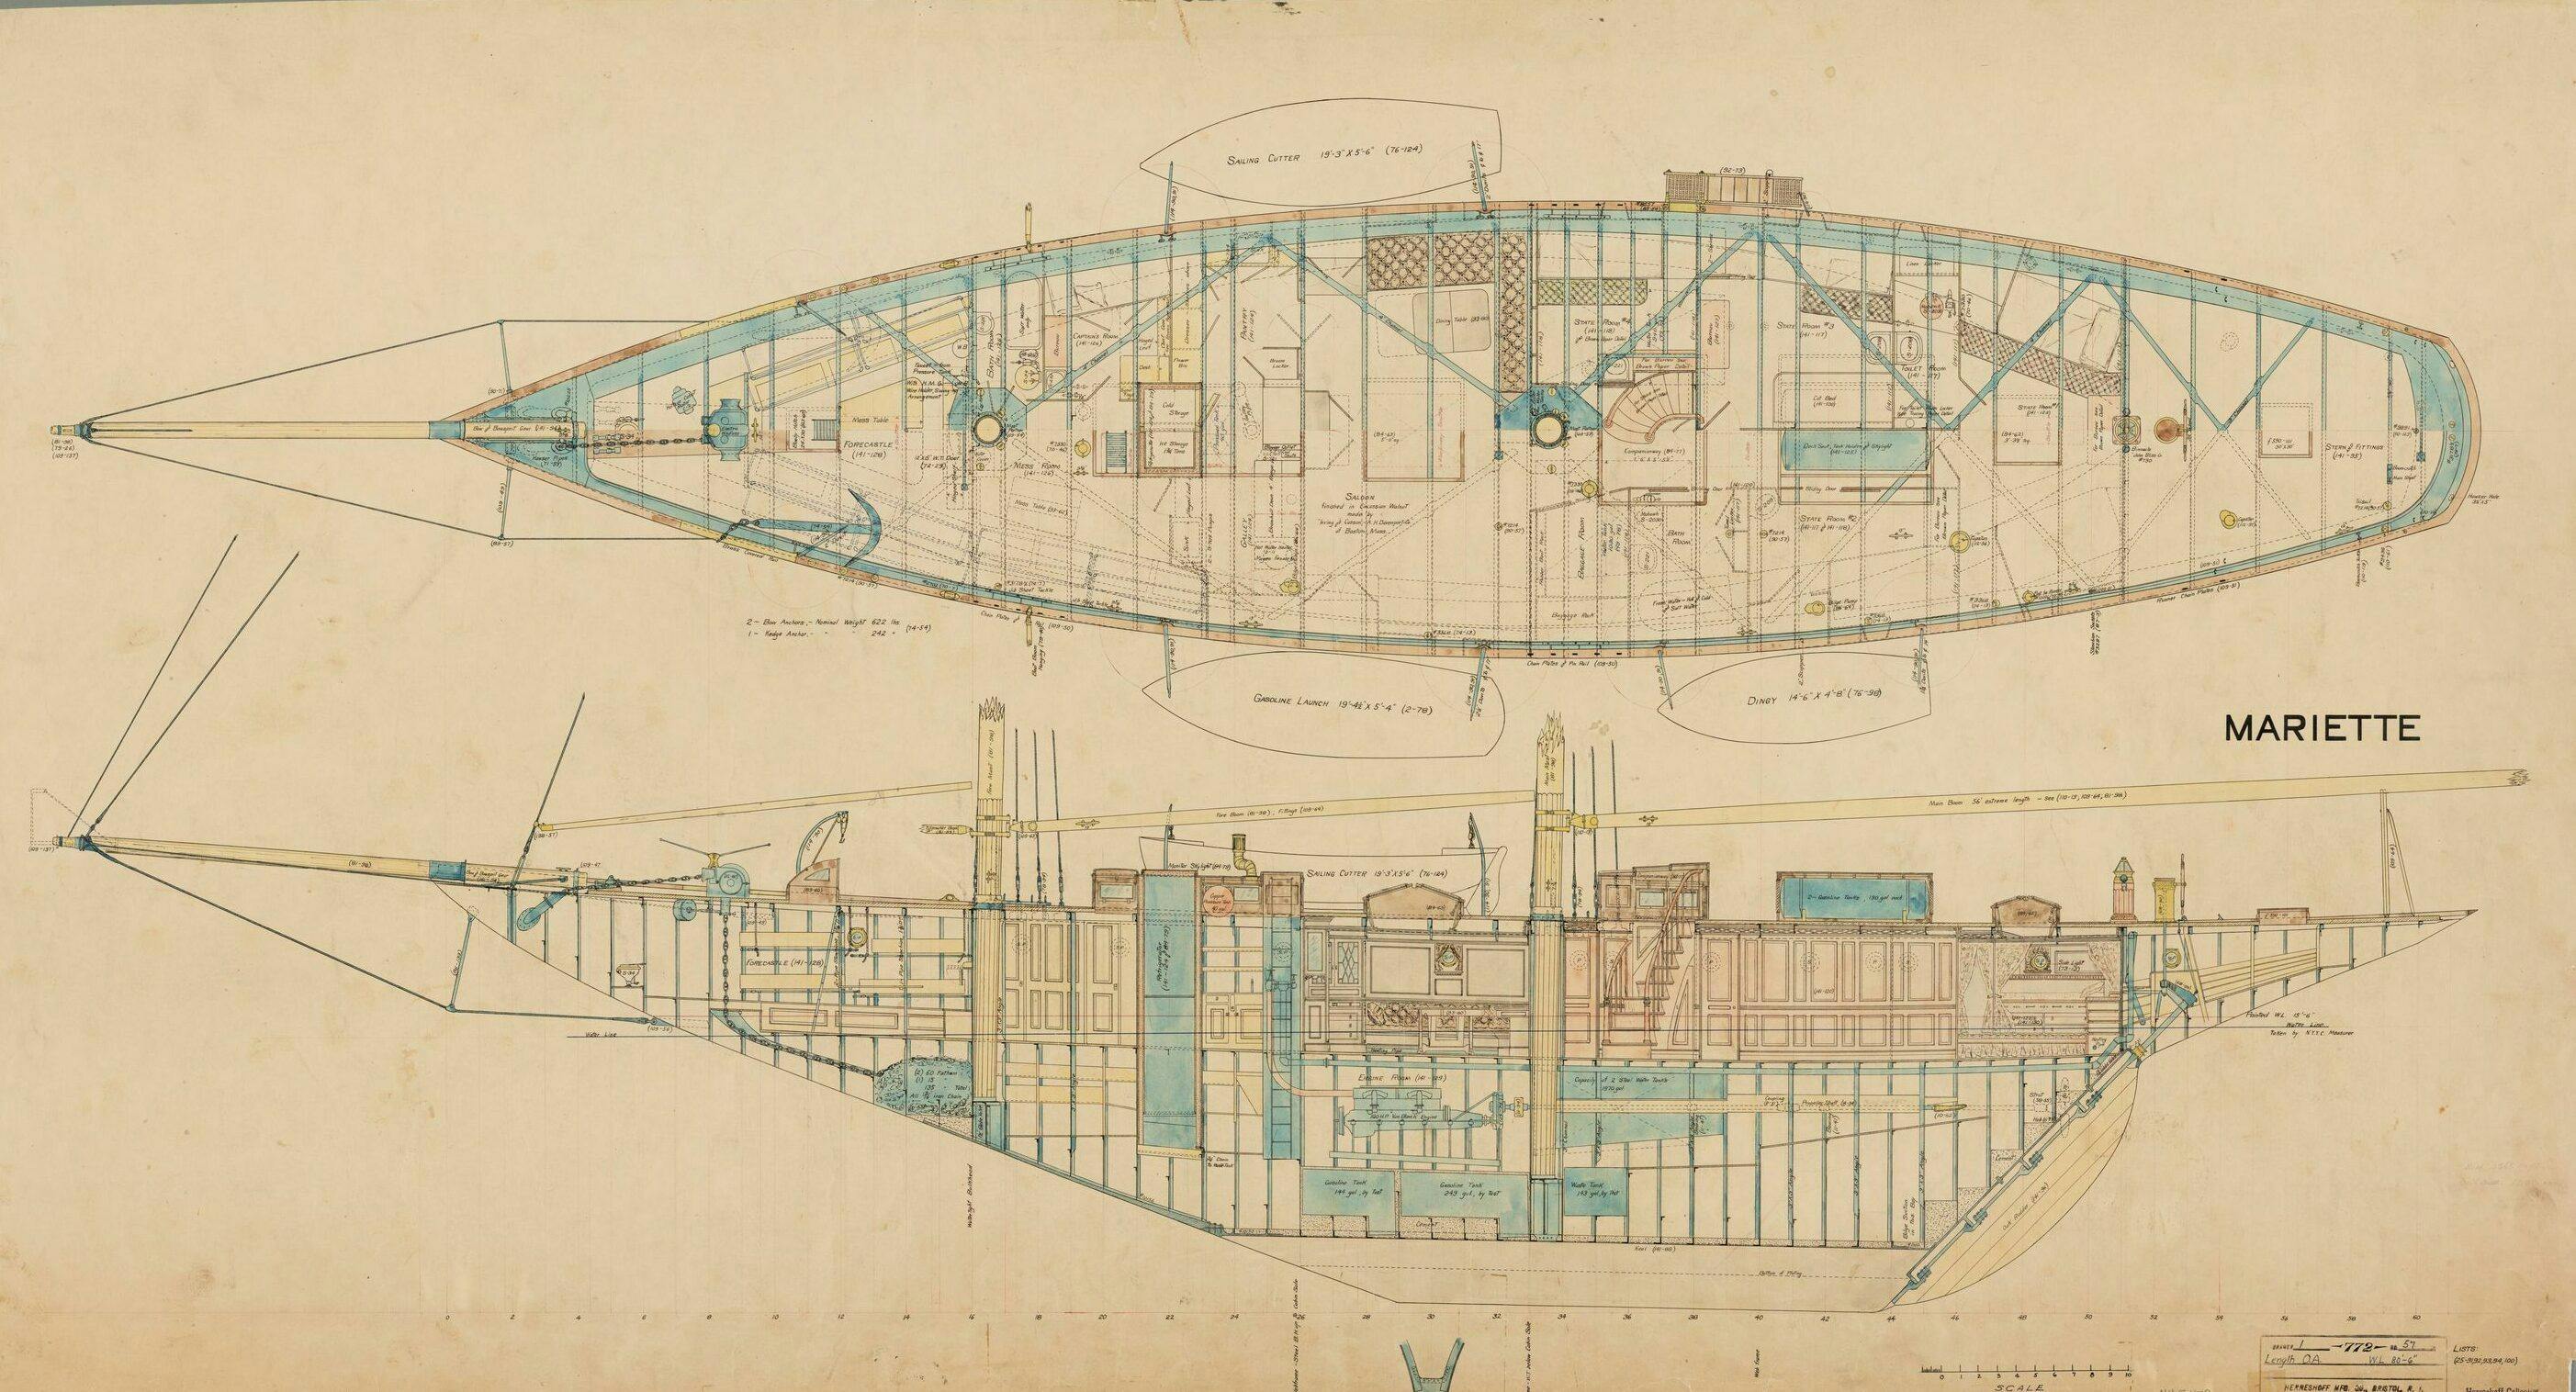 Plan of ship Mariette